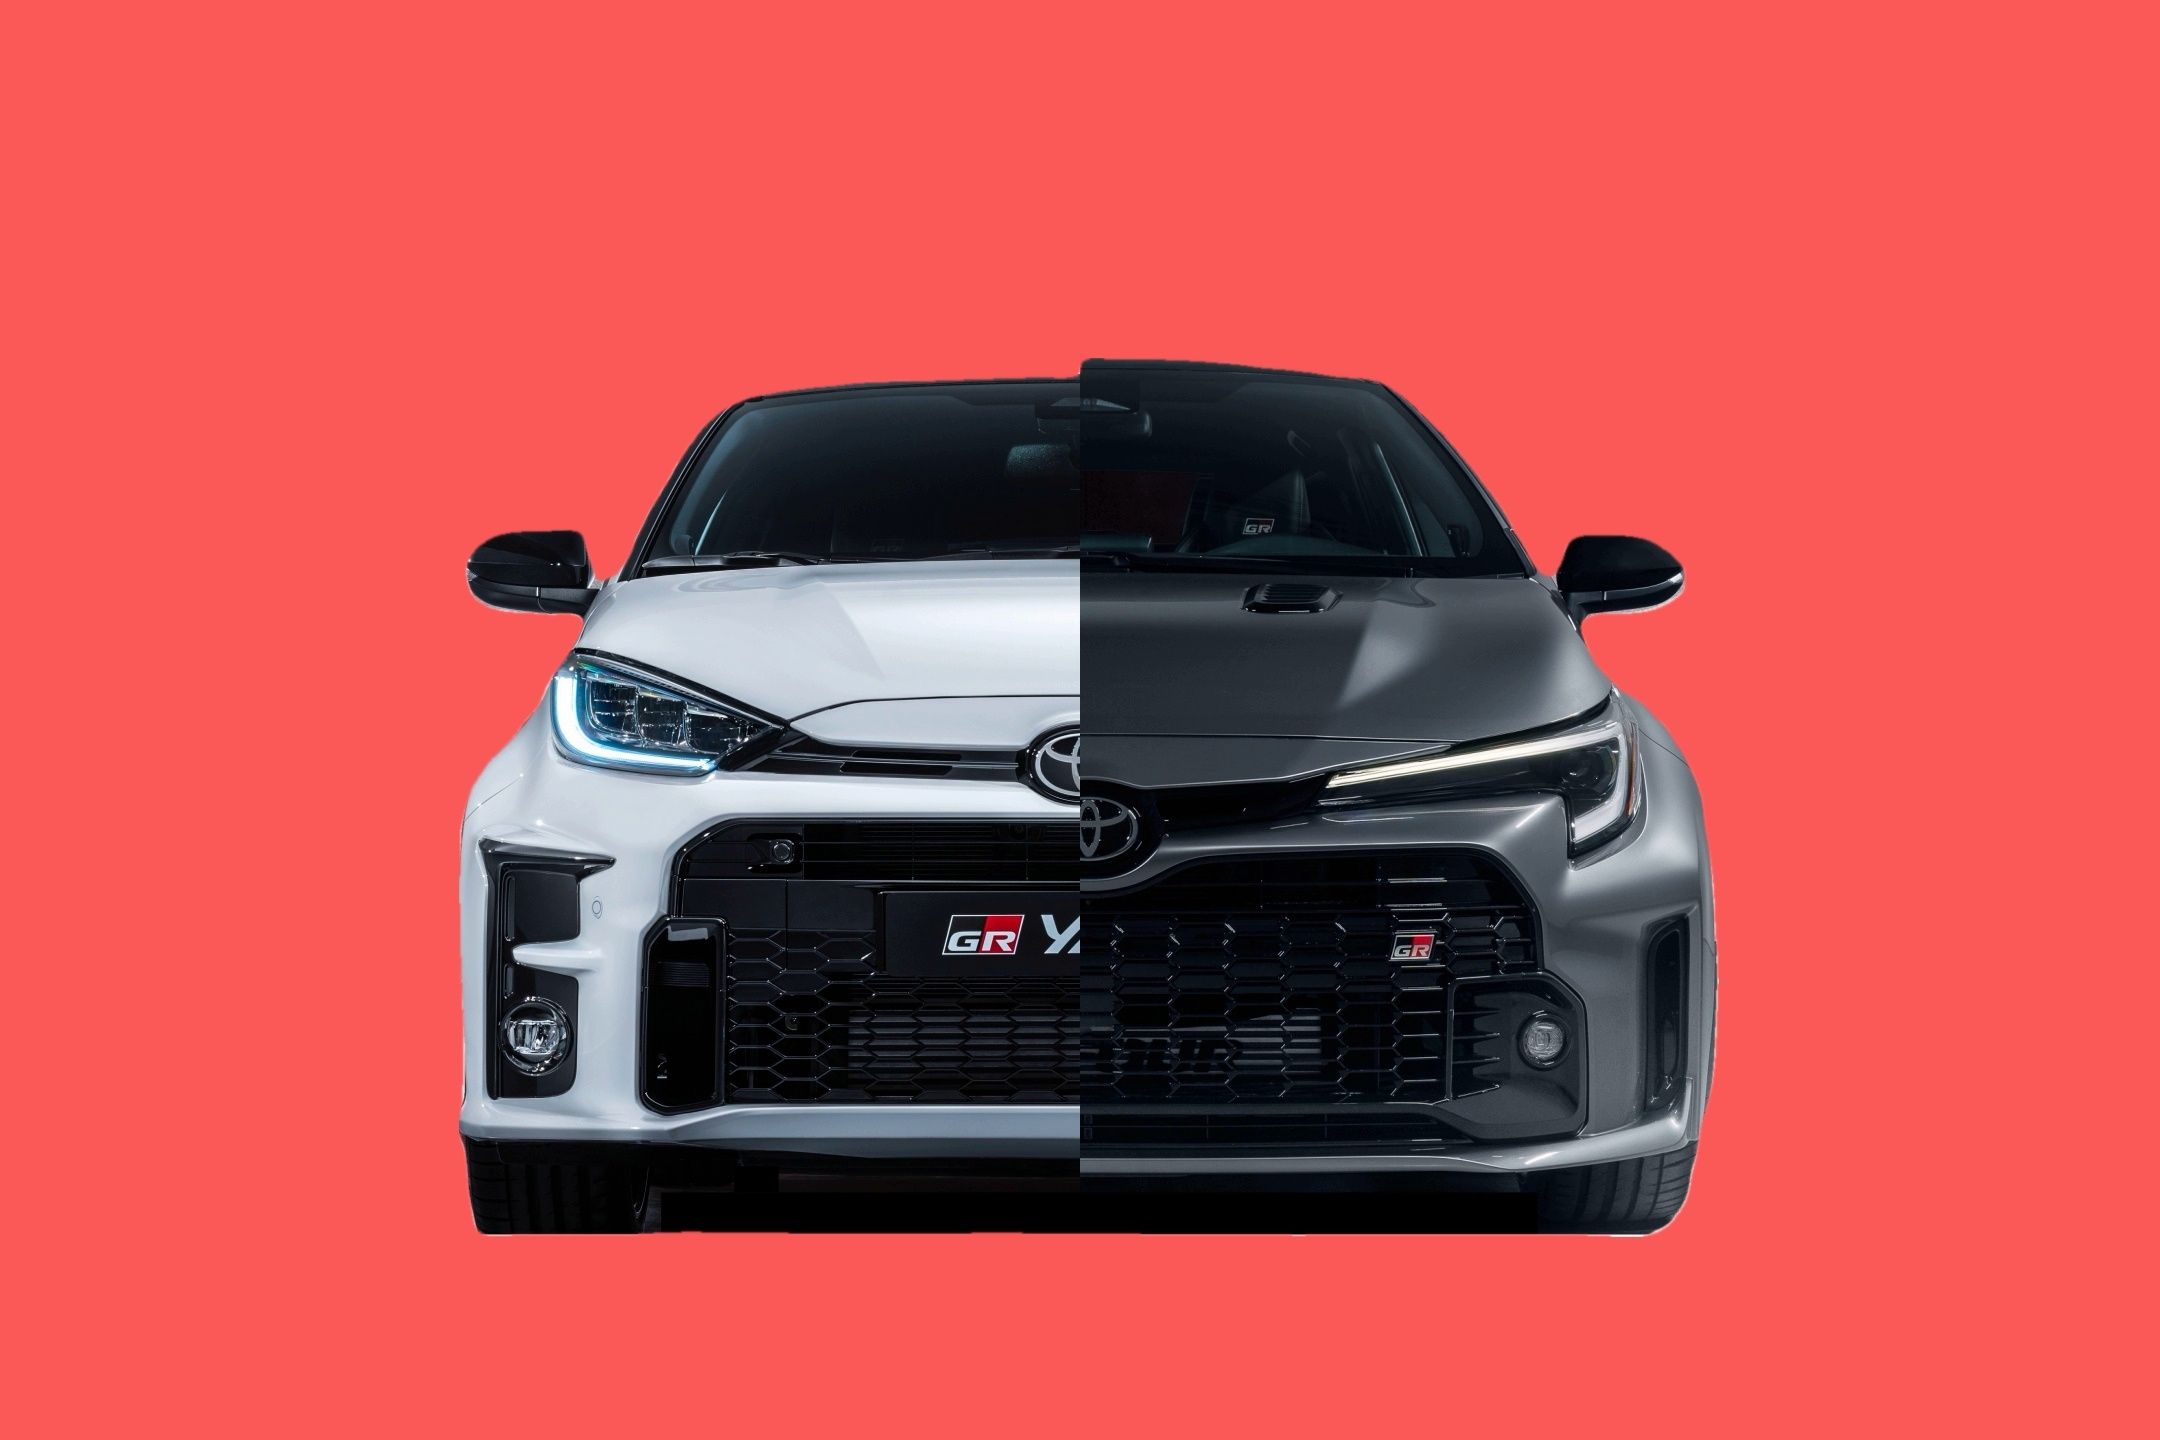 GR Corolla vs GR Yaris PowerToWeight Ratio Compared